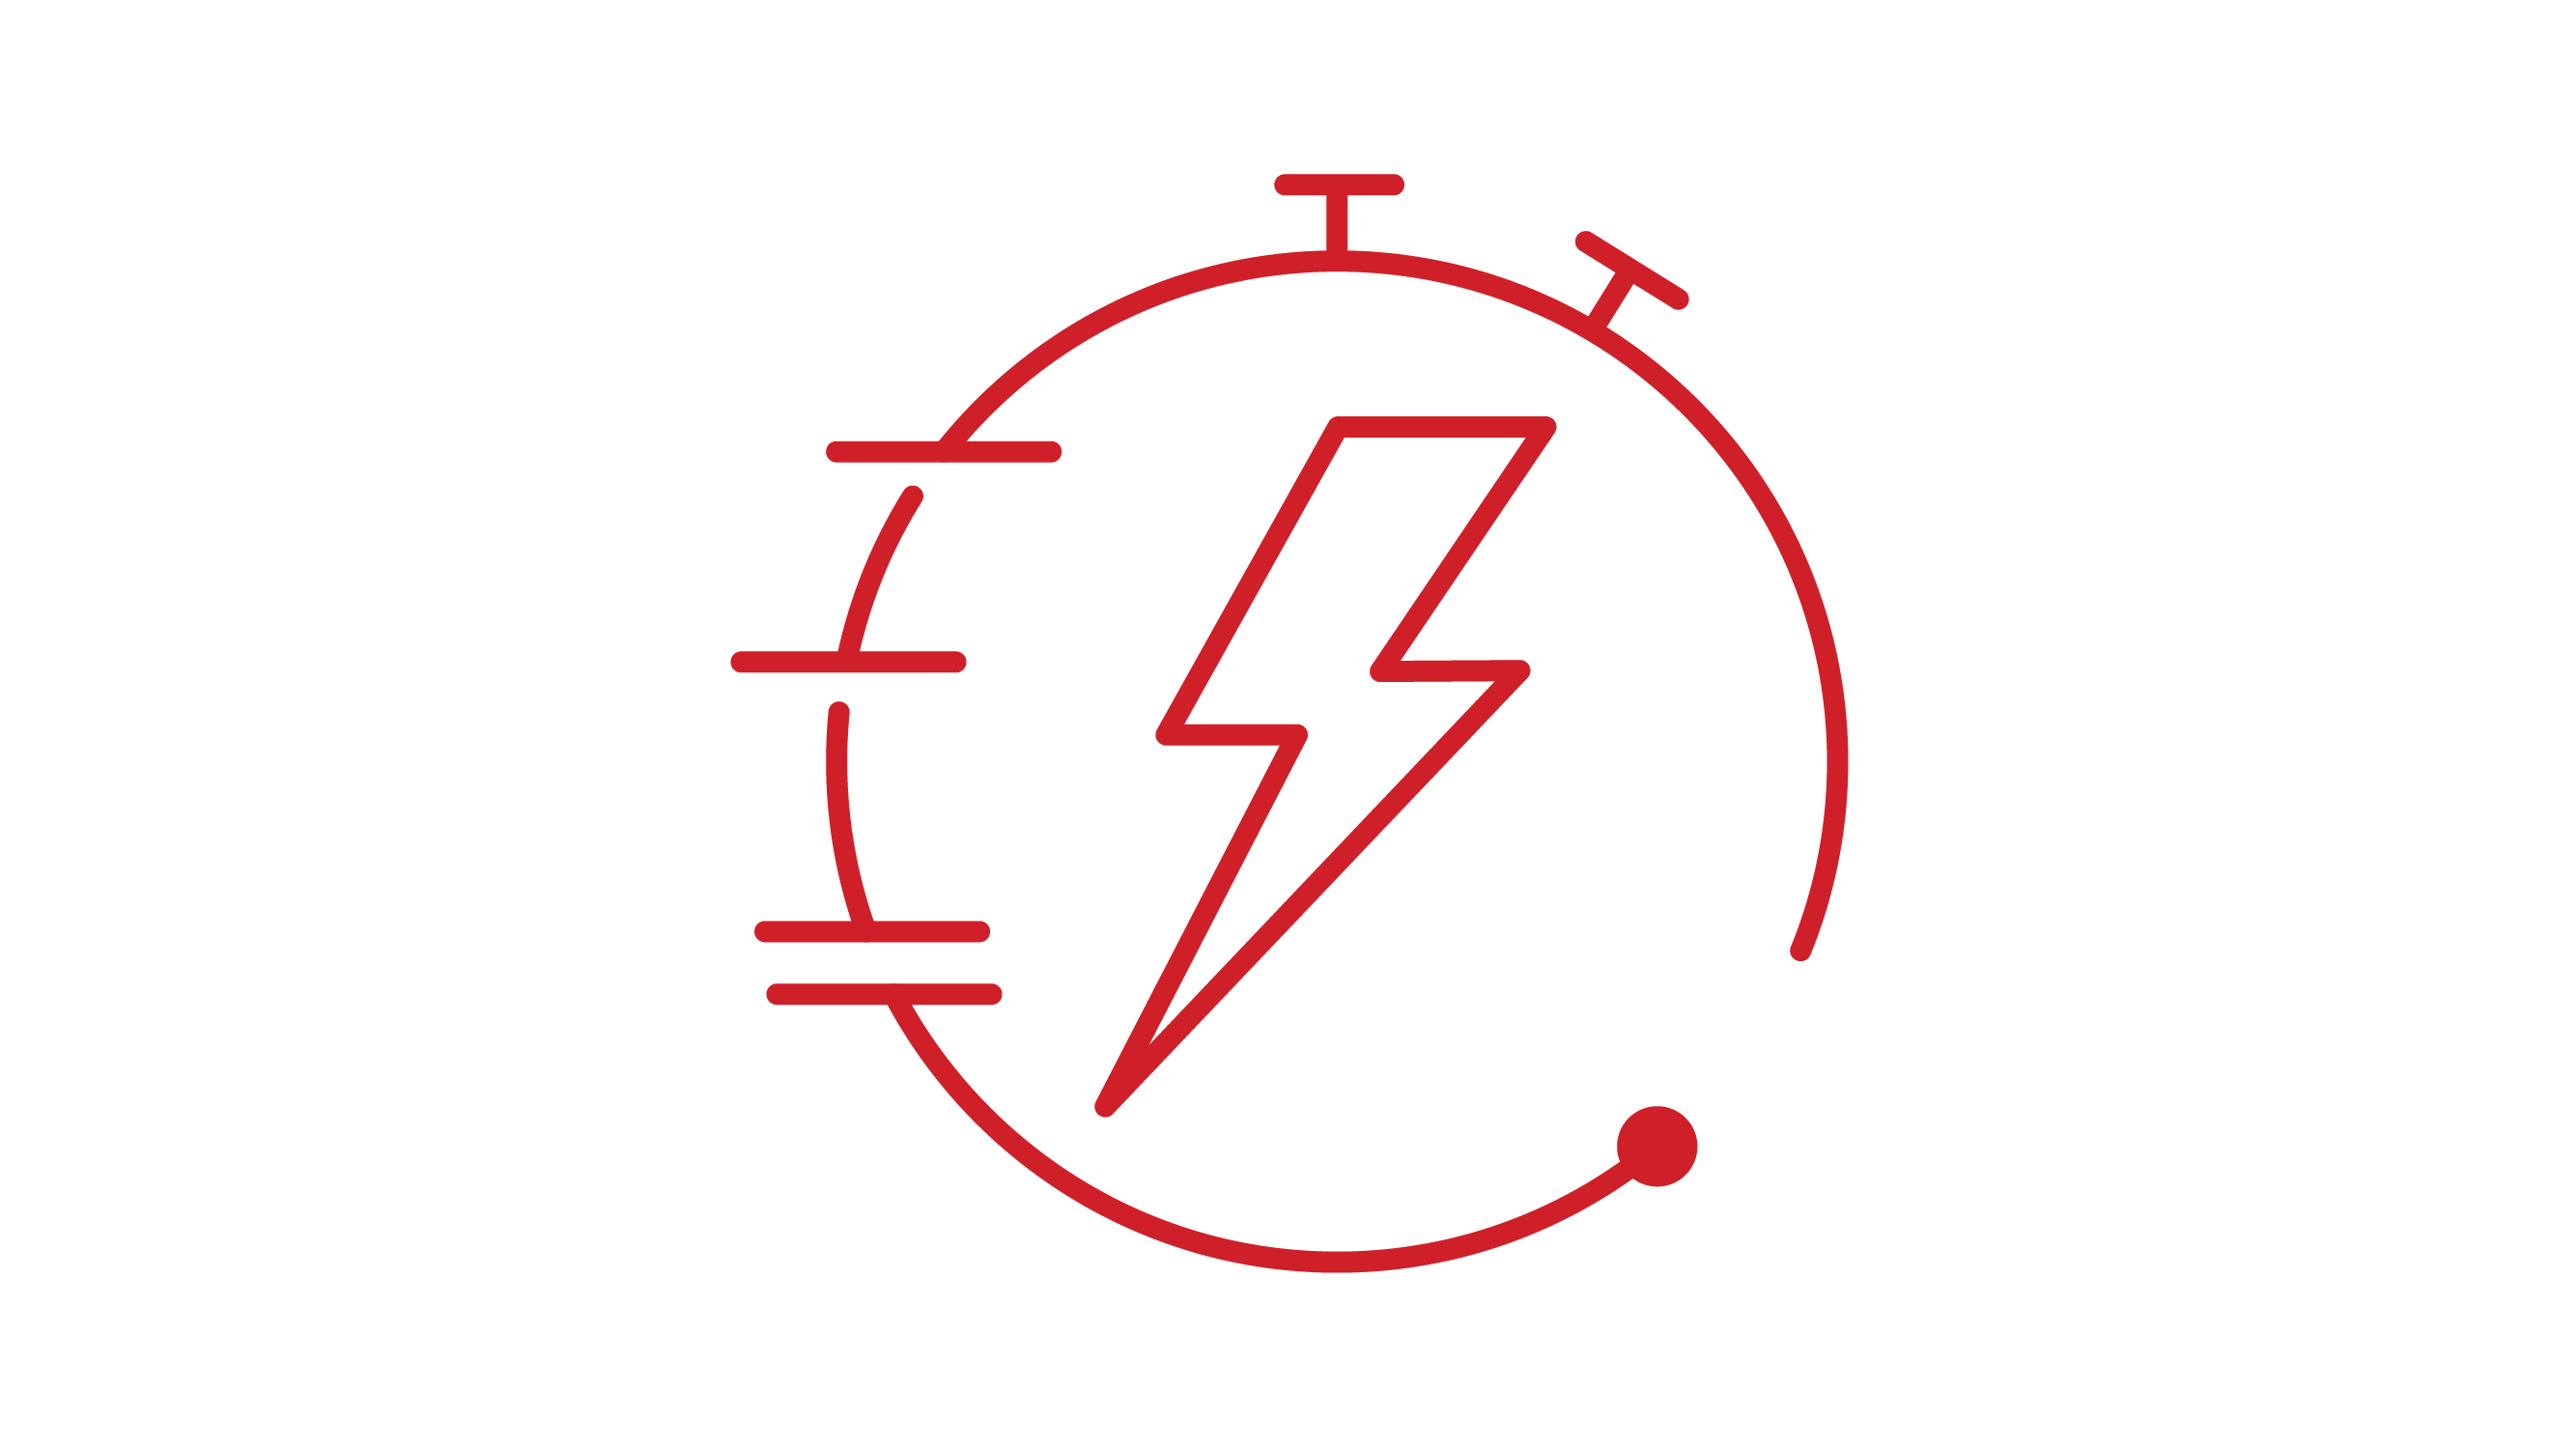 Lightning symbol in circle RTX red icon